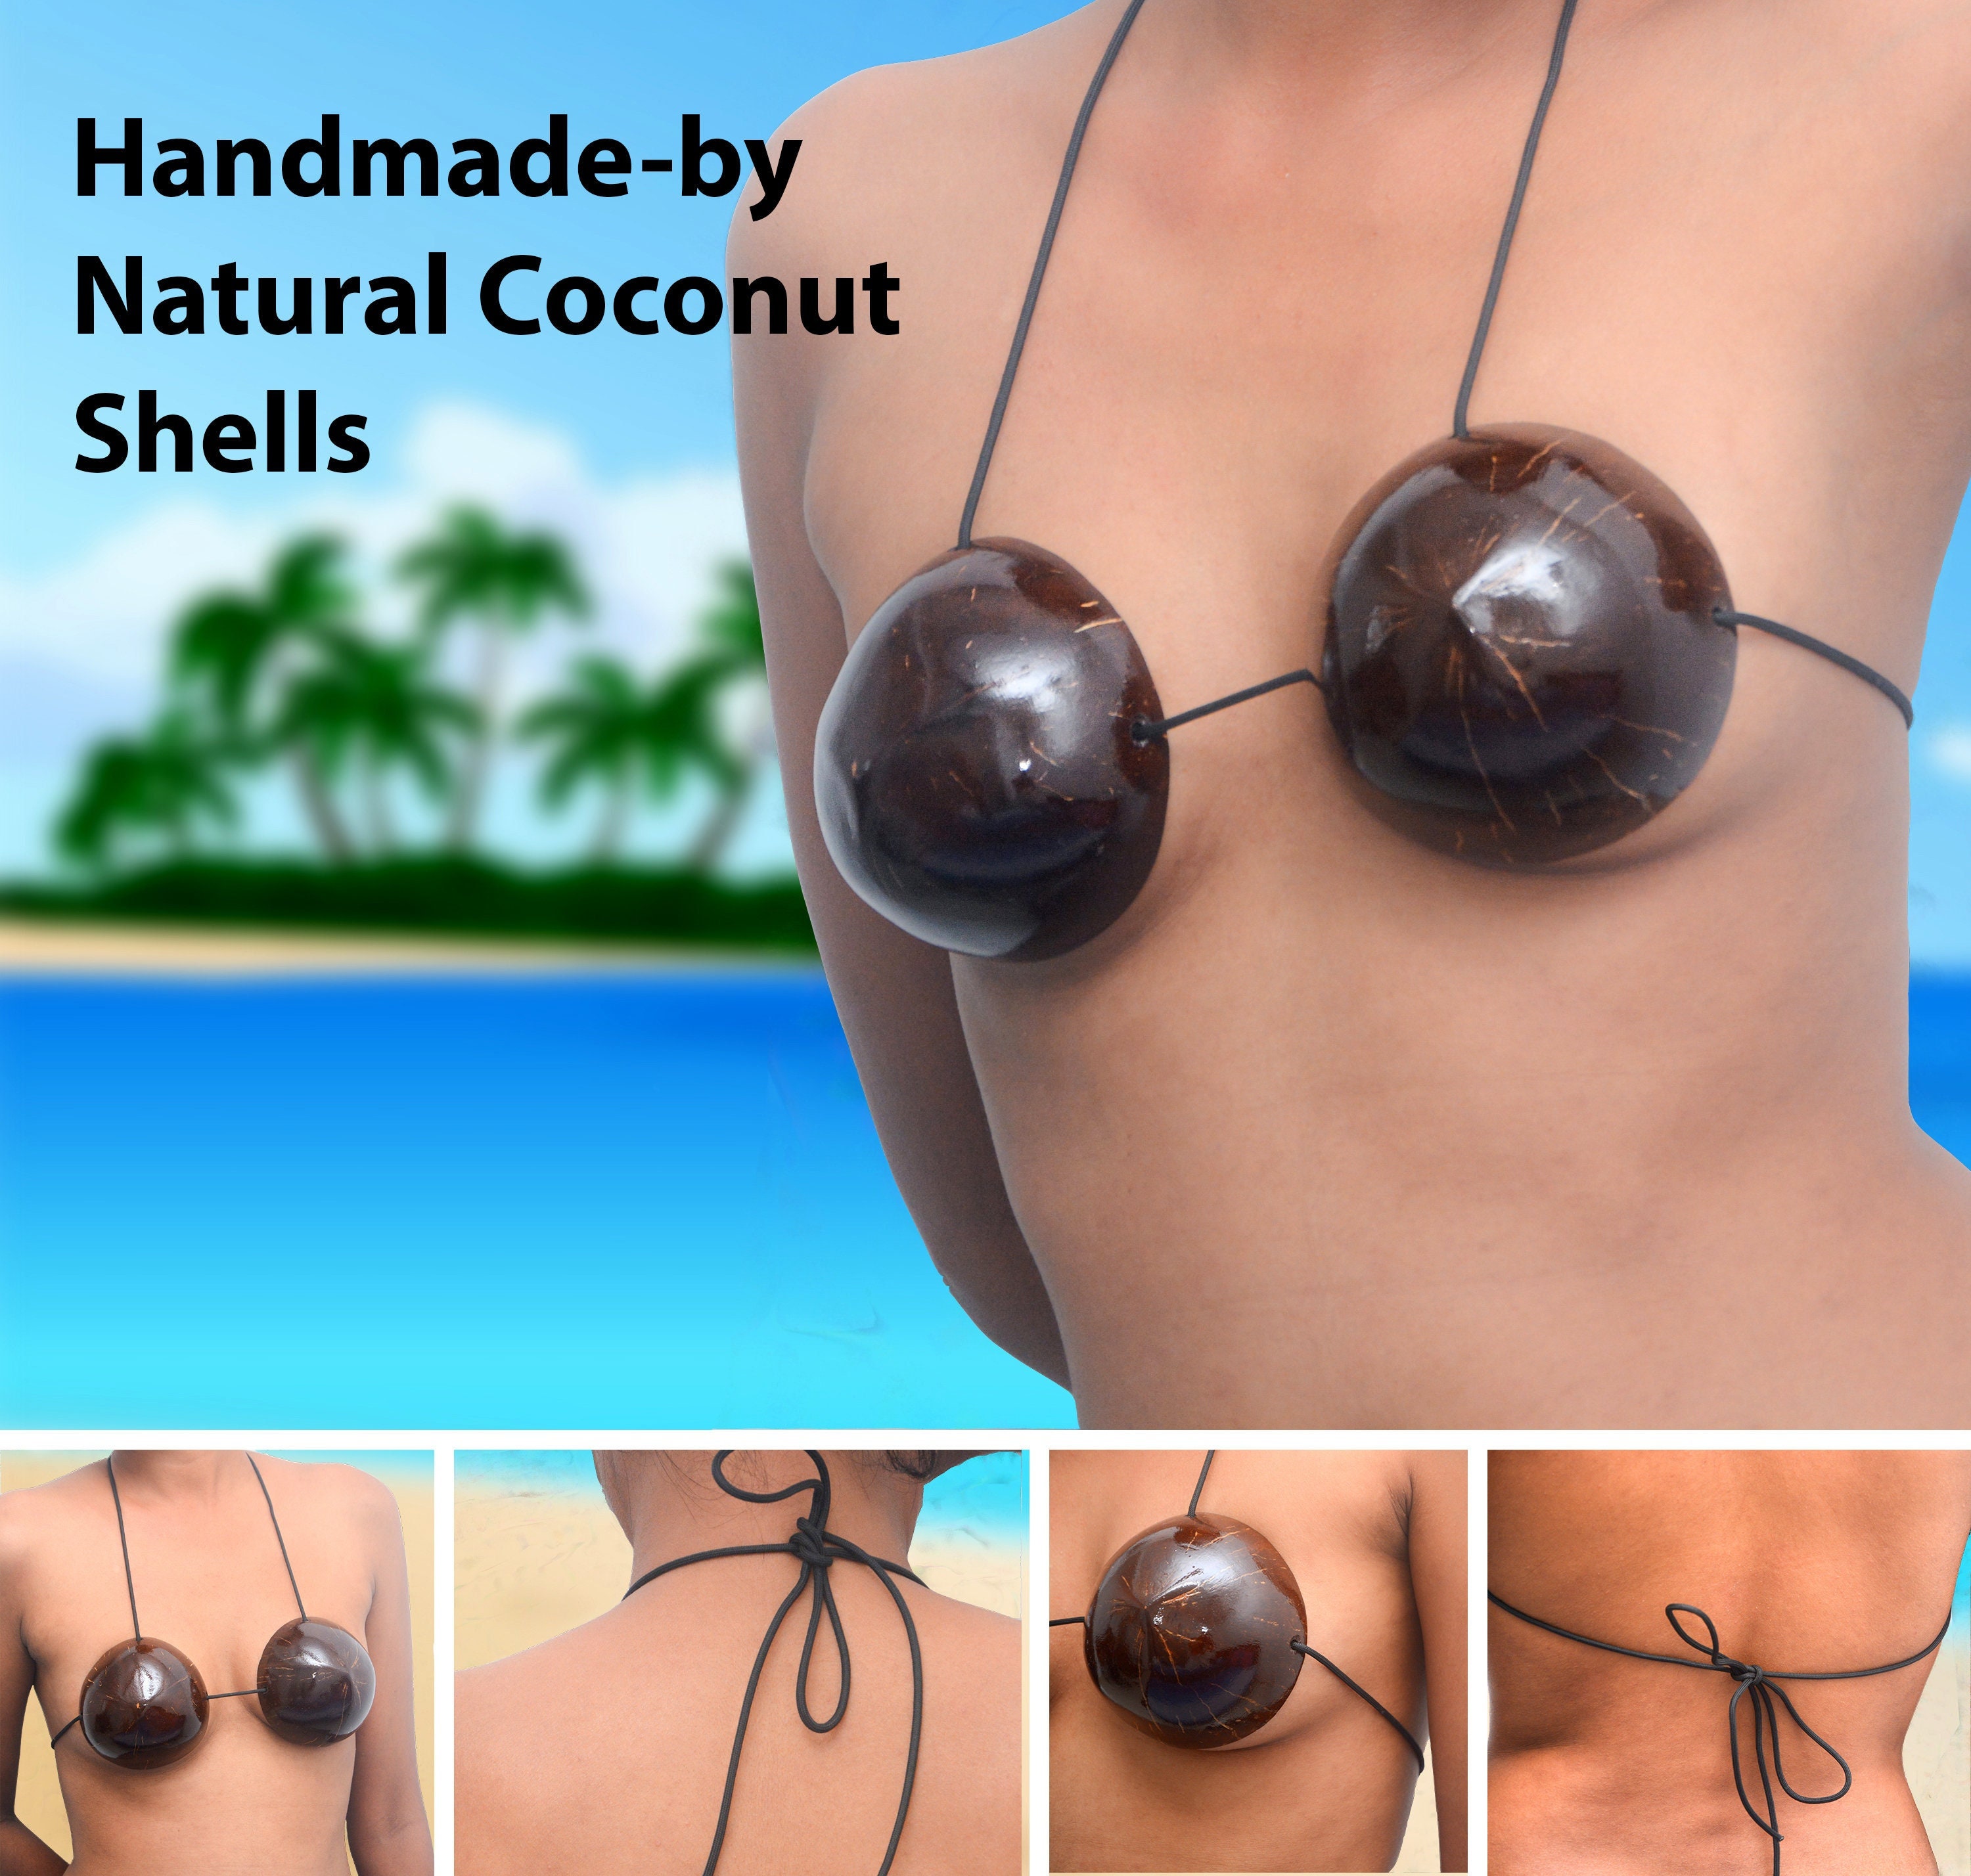 Handmade Natural Coconut Shell Bras Hawaii Beach Bikini Brassieres Lingerie